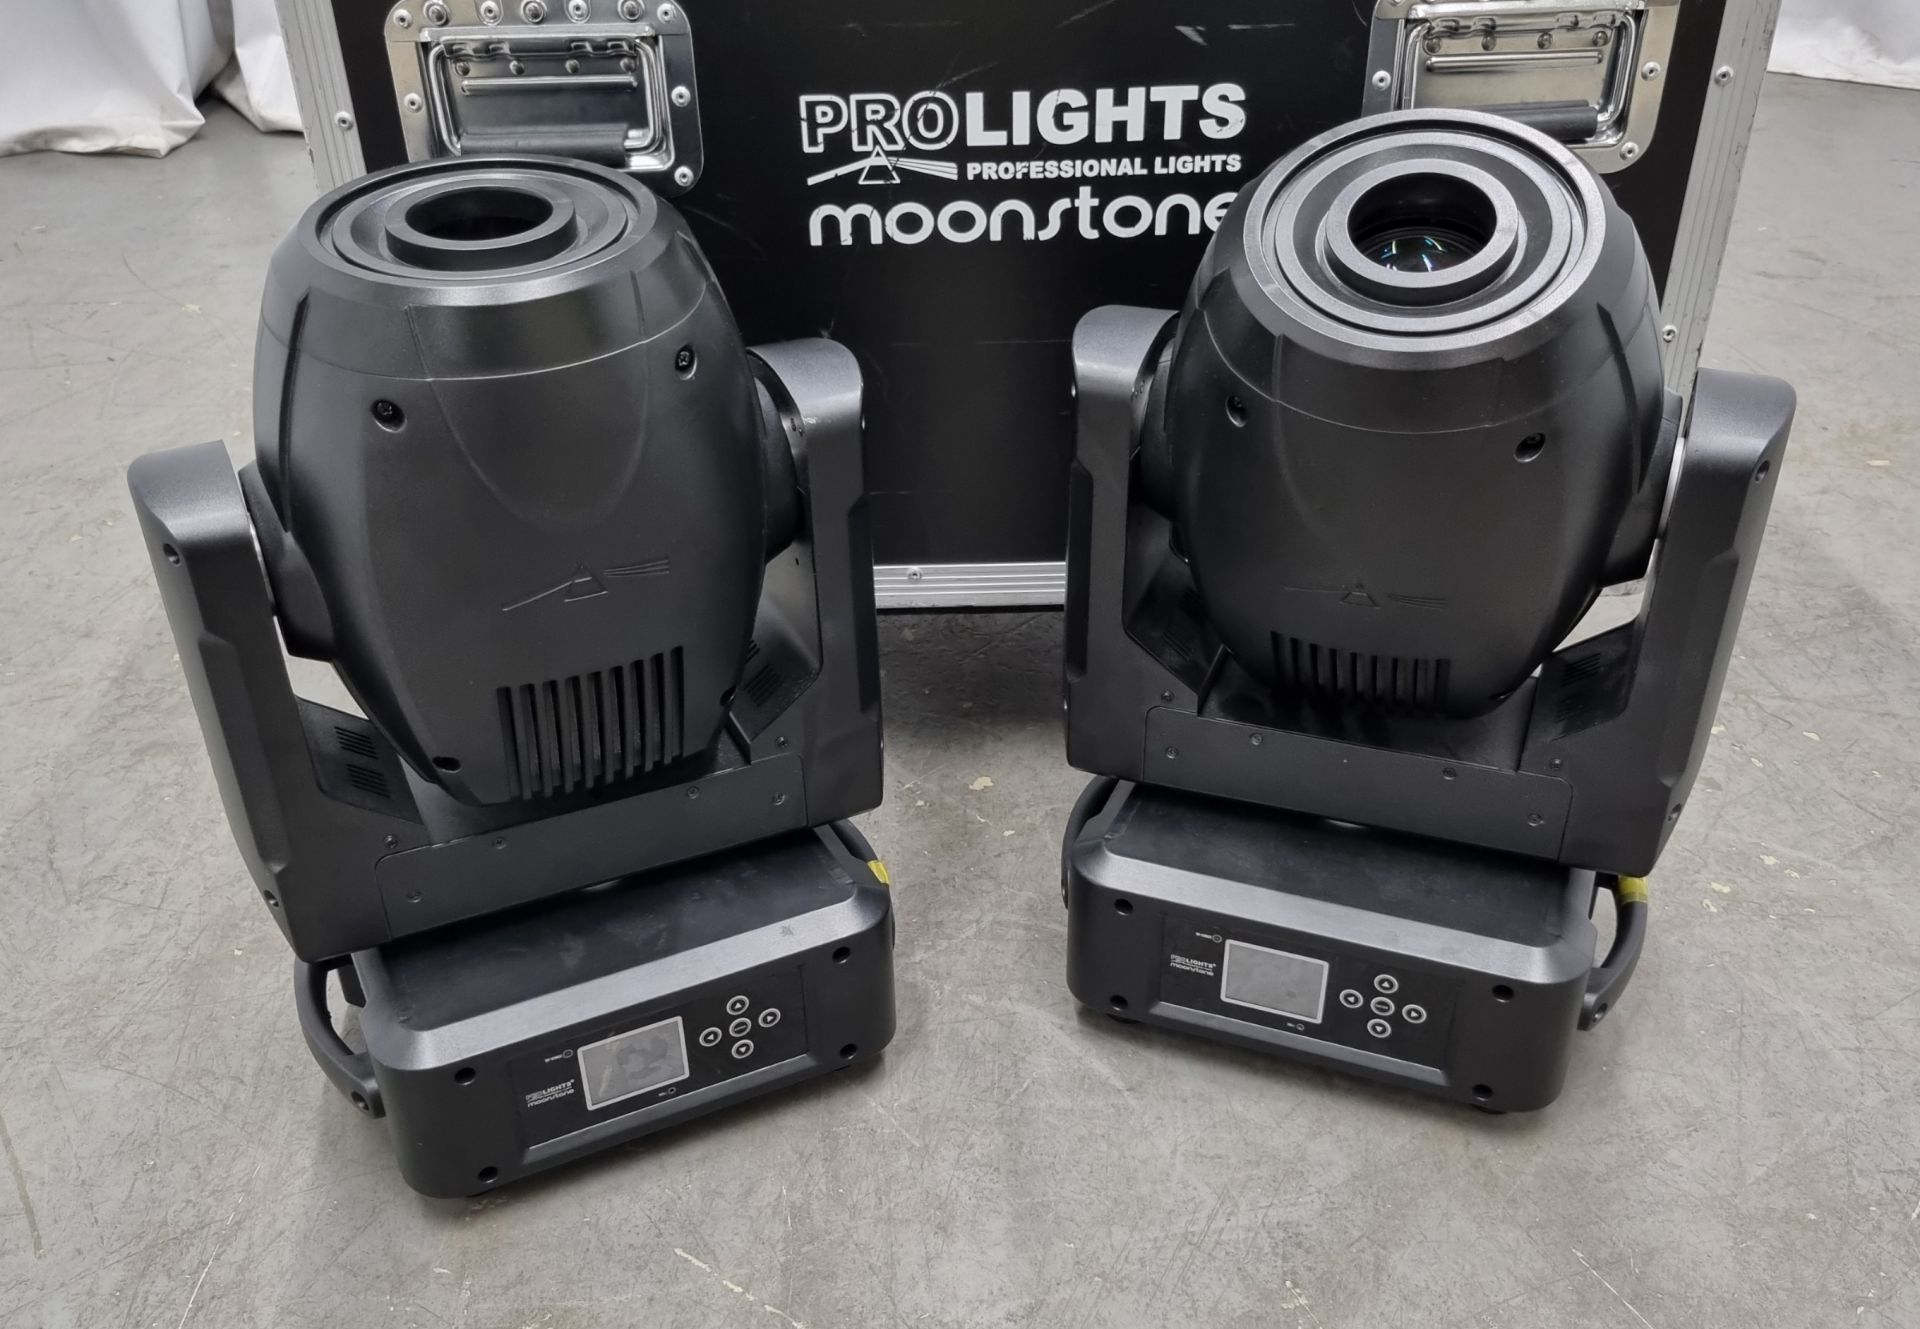 2x Prolights Moonstone LED spot moving head lights with flight case - Image 2 of 13